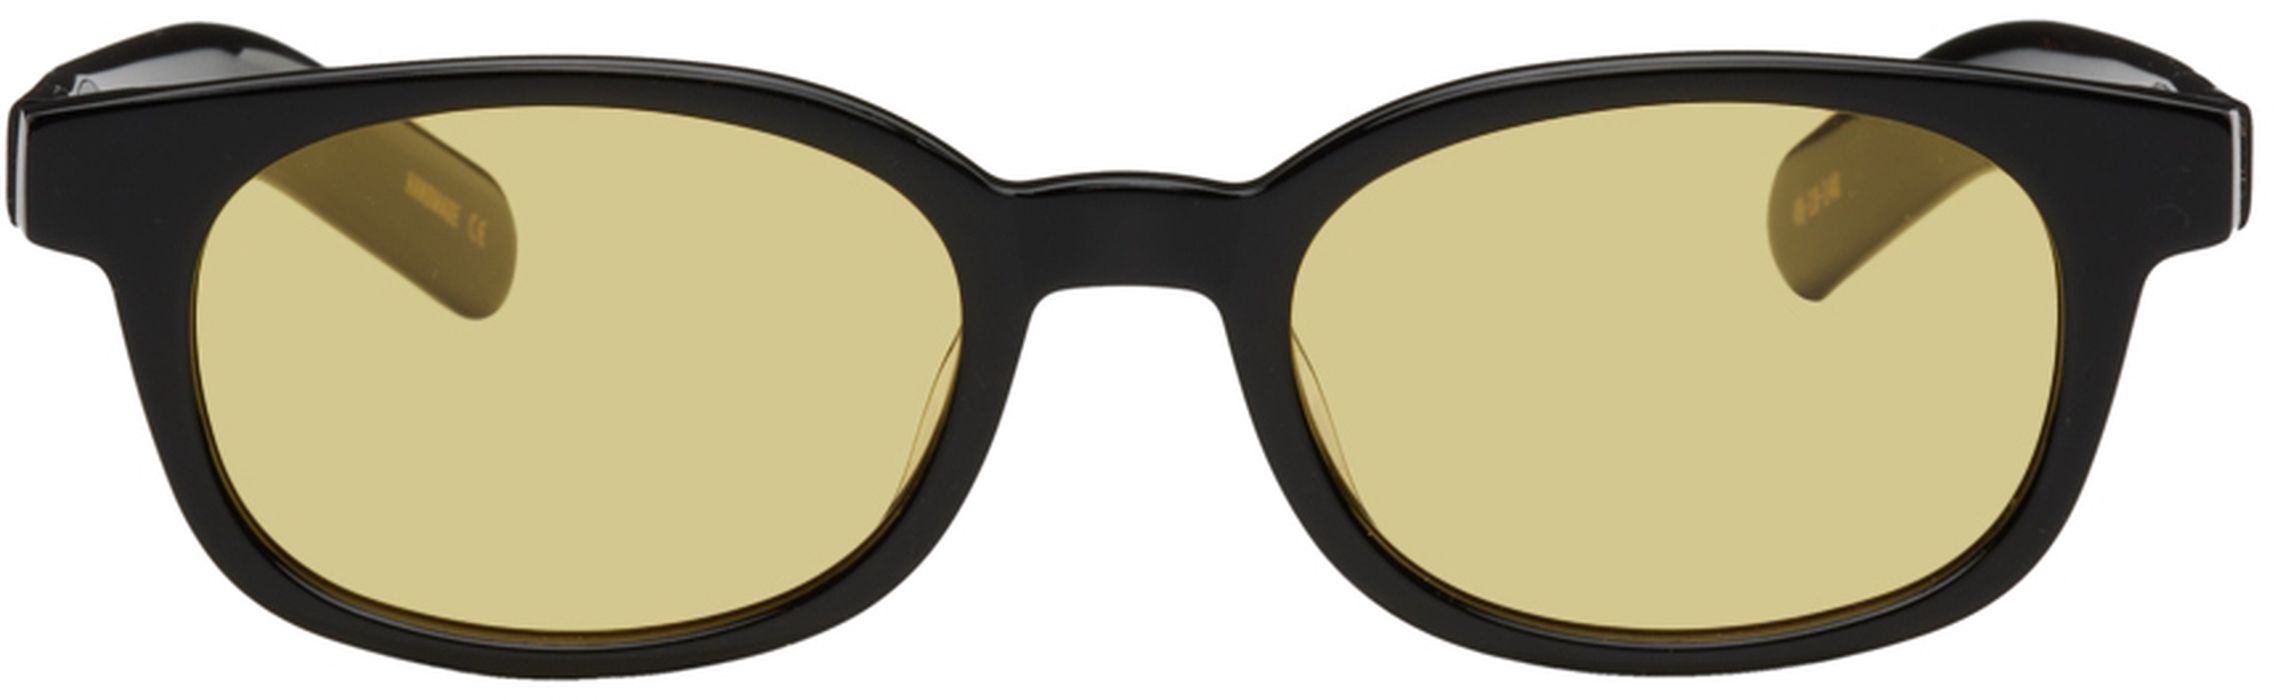 FLATLIST EYEWEAR Black 'Le Bucheron' Sunglasses